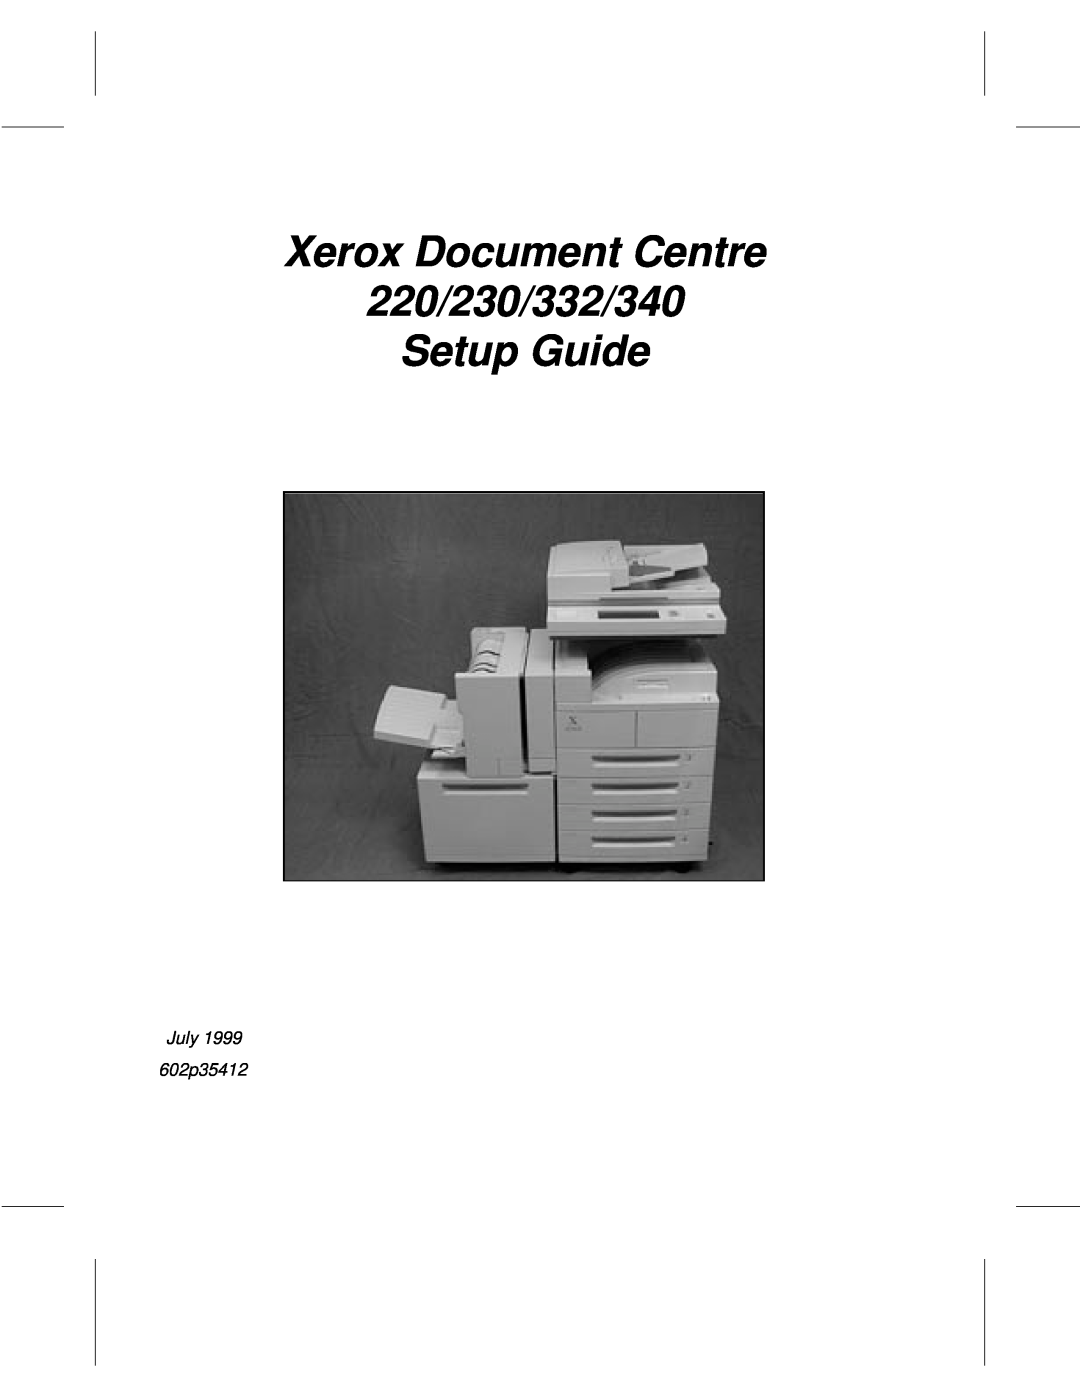 Xerox setup guide Xerox Document Centre 220/230/332/340 Setup Guide, July 602p35412 